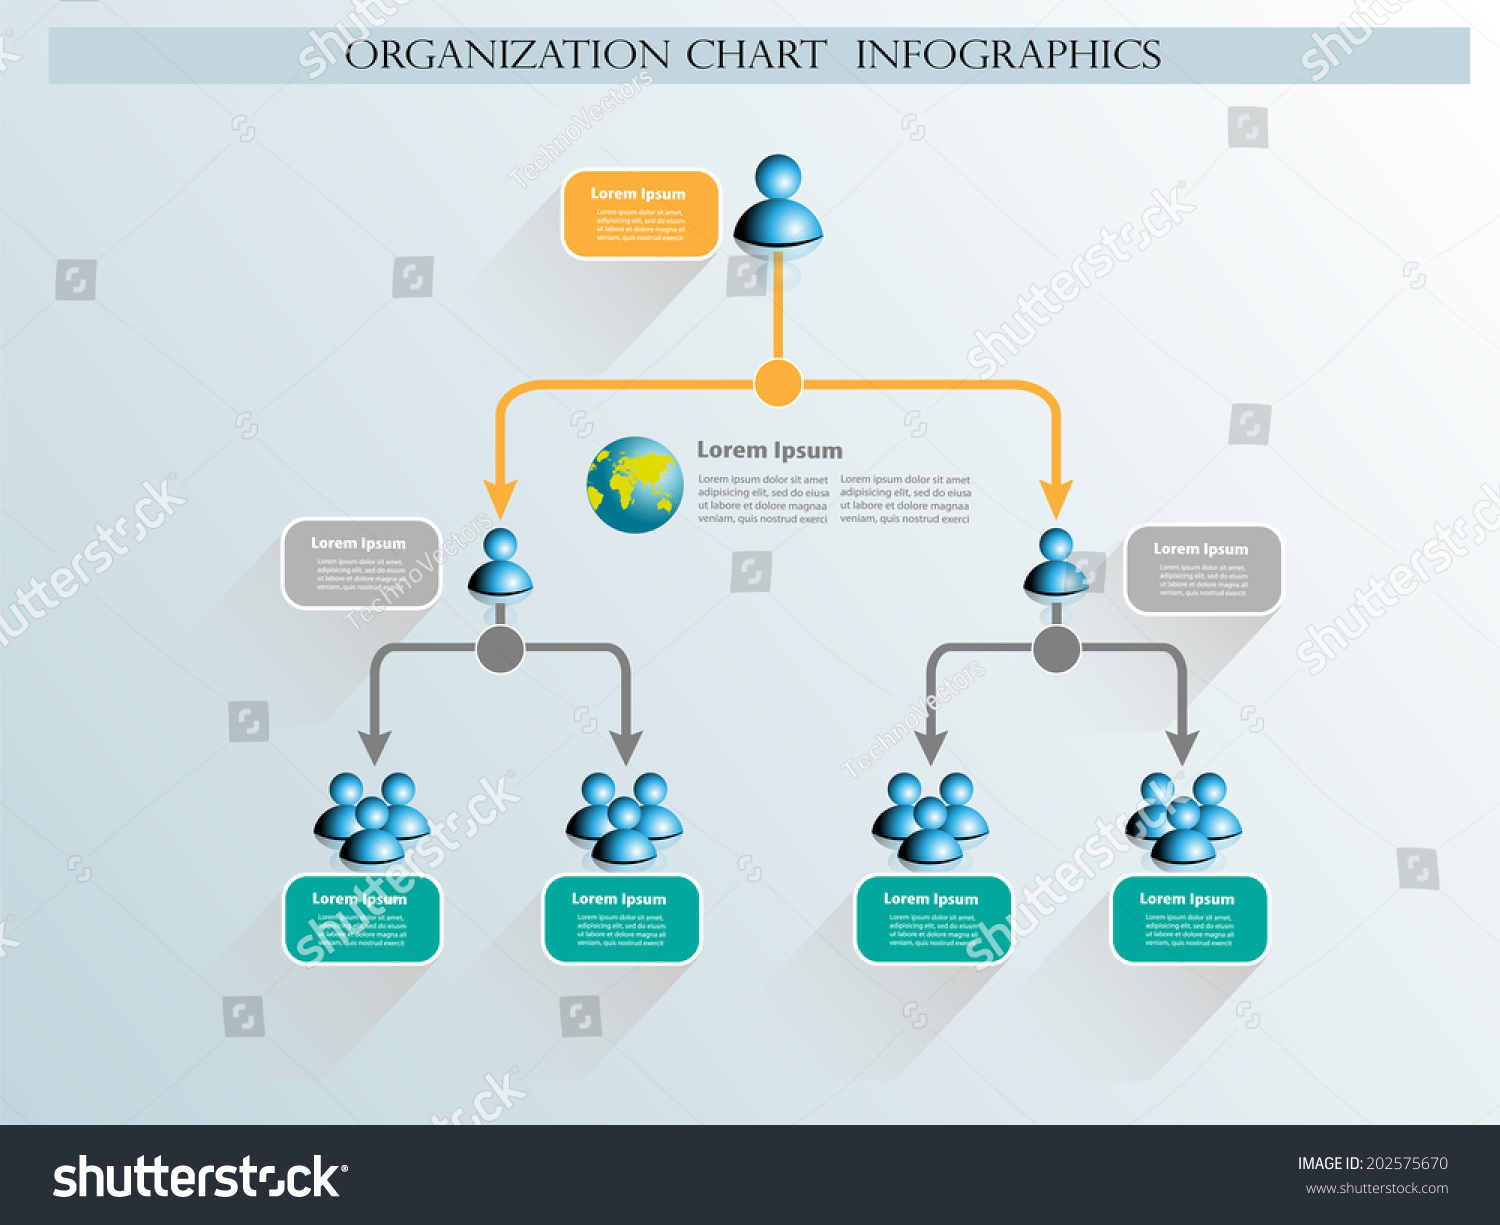 clipart organisation chart - photo #42